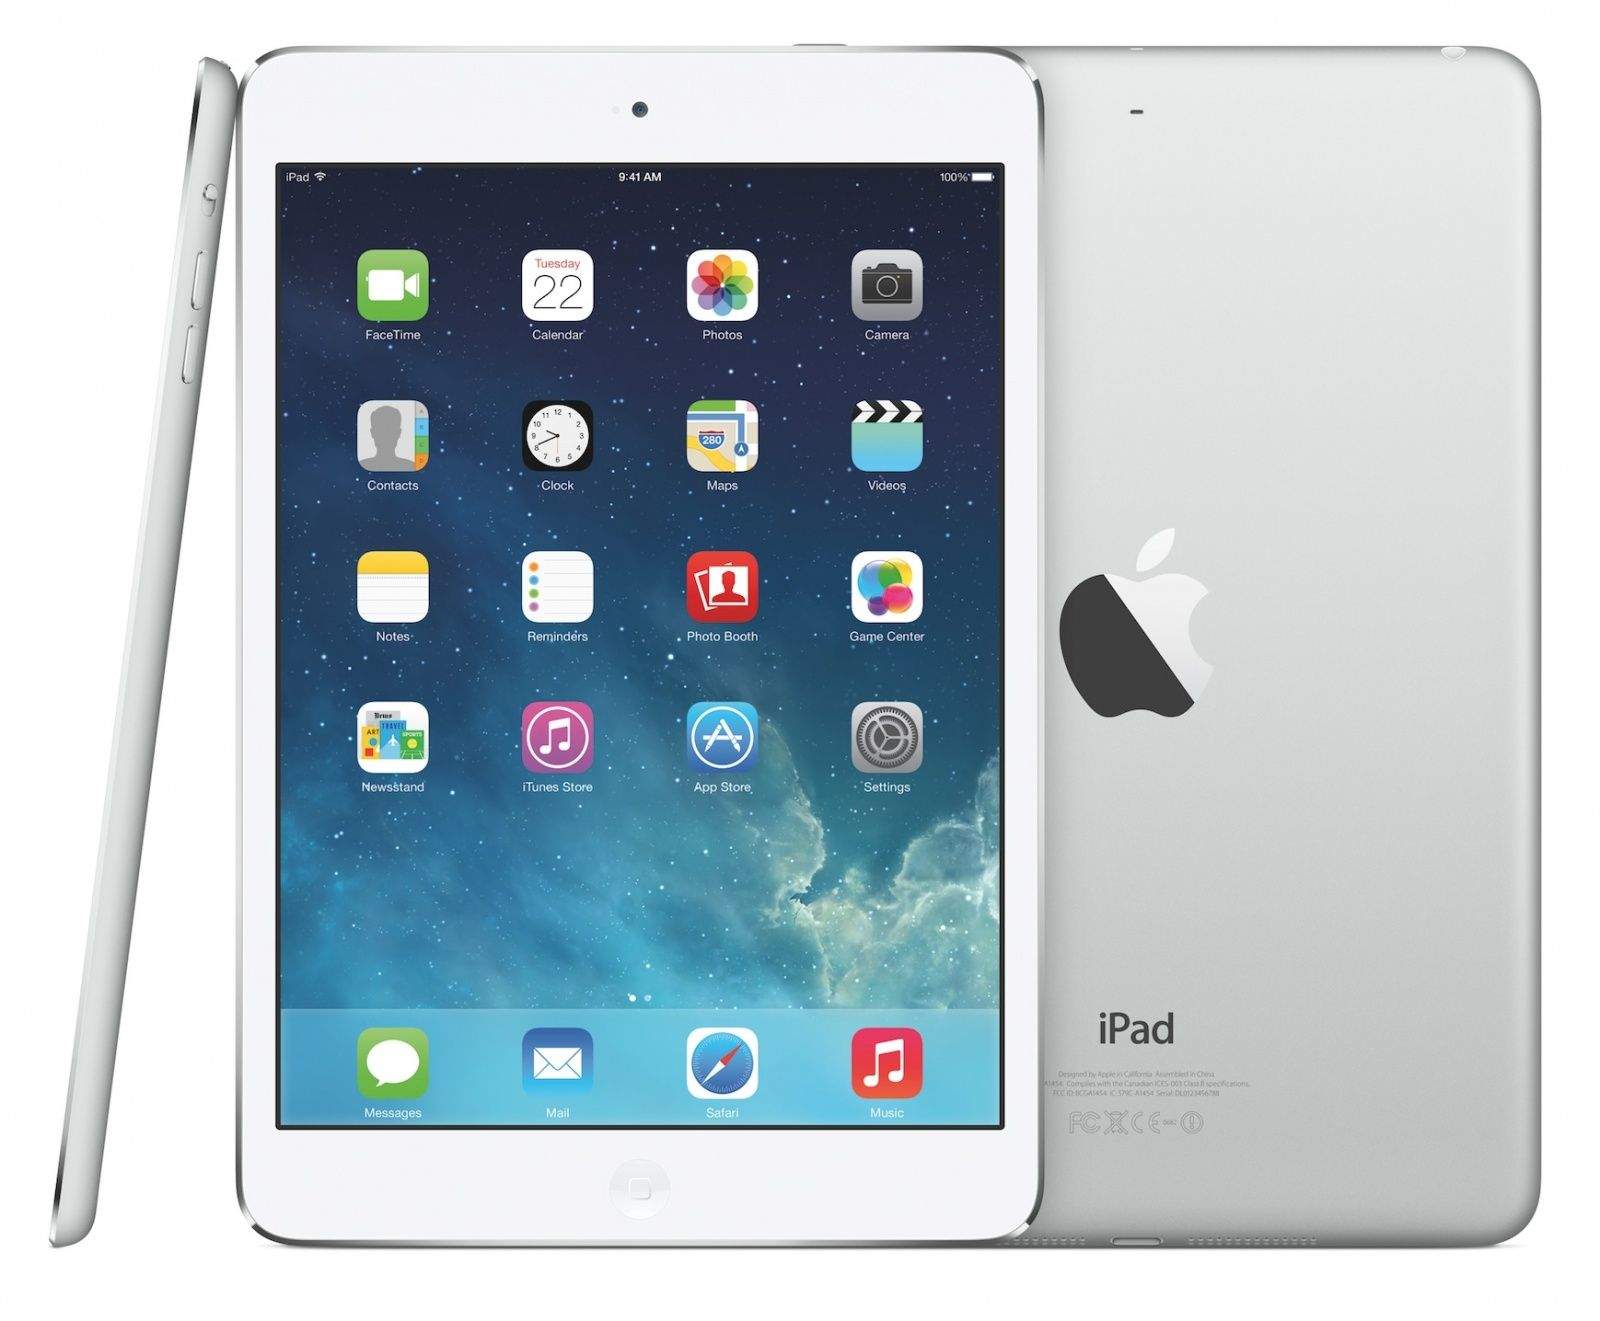 iPad Air and iPad mini